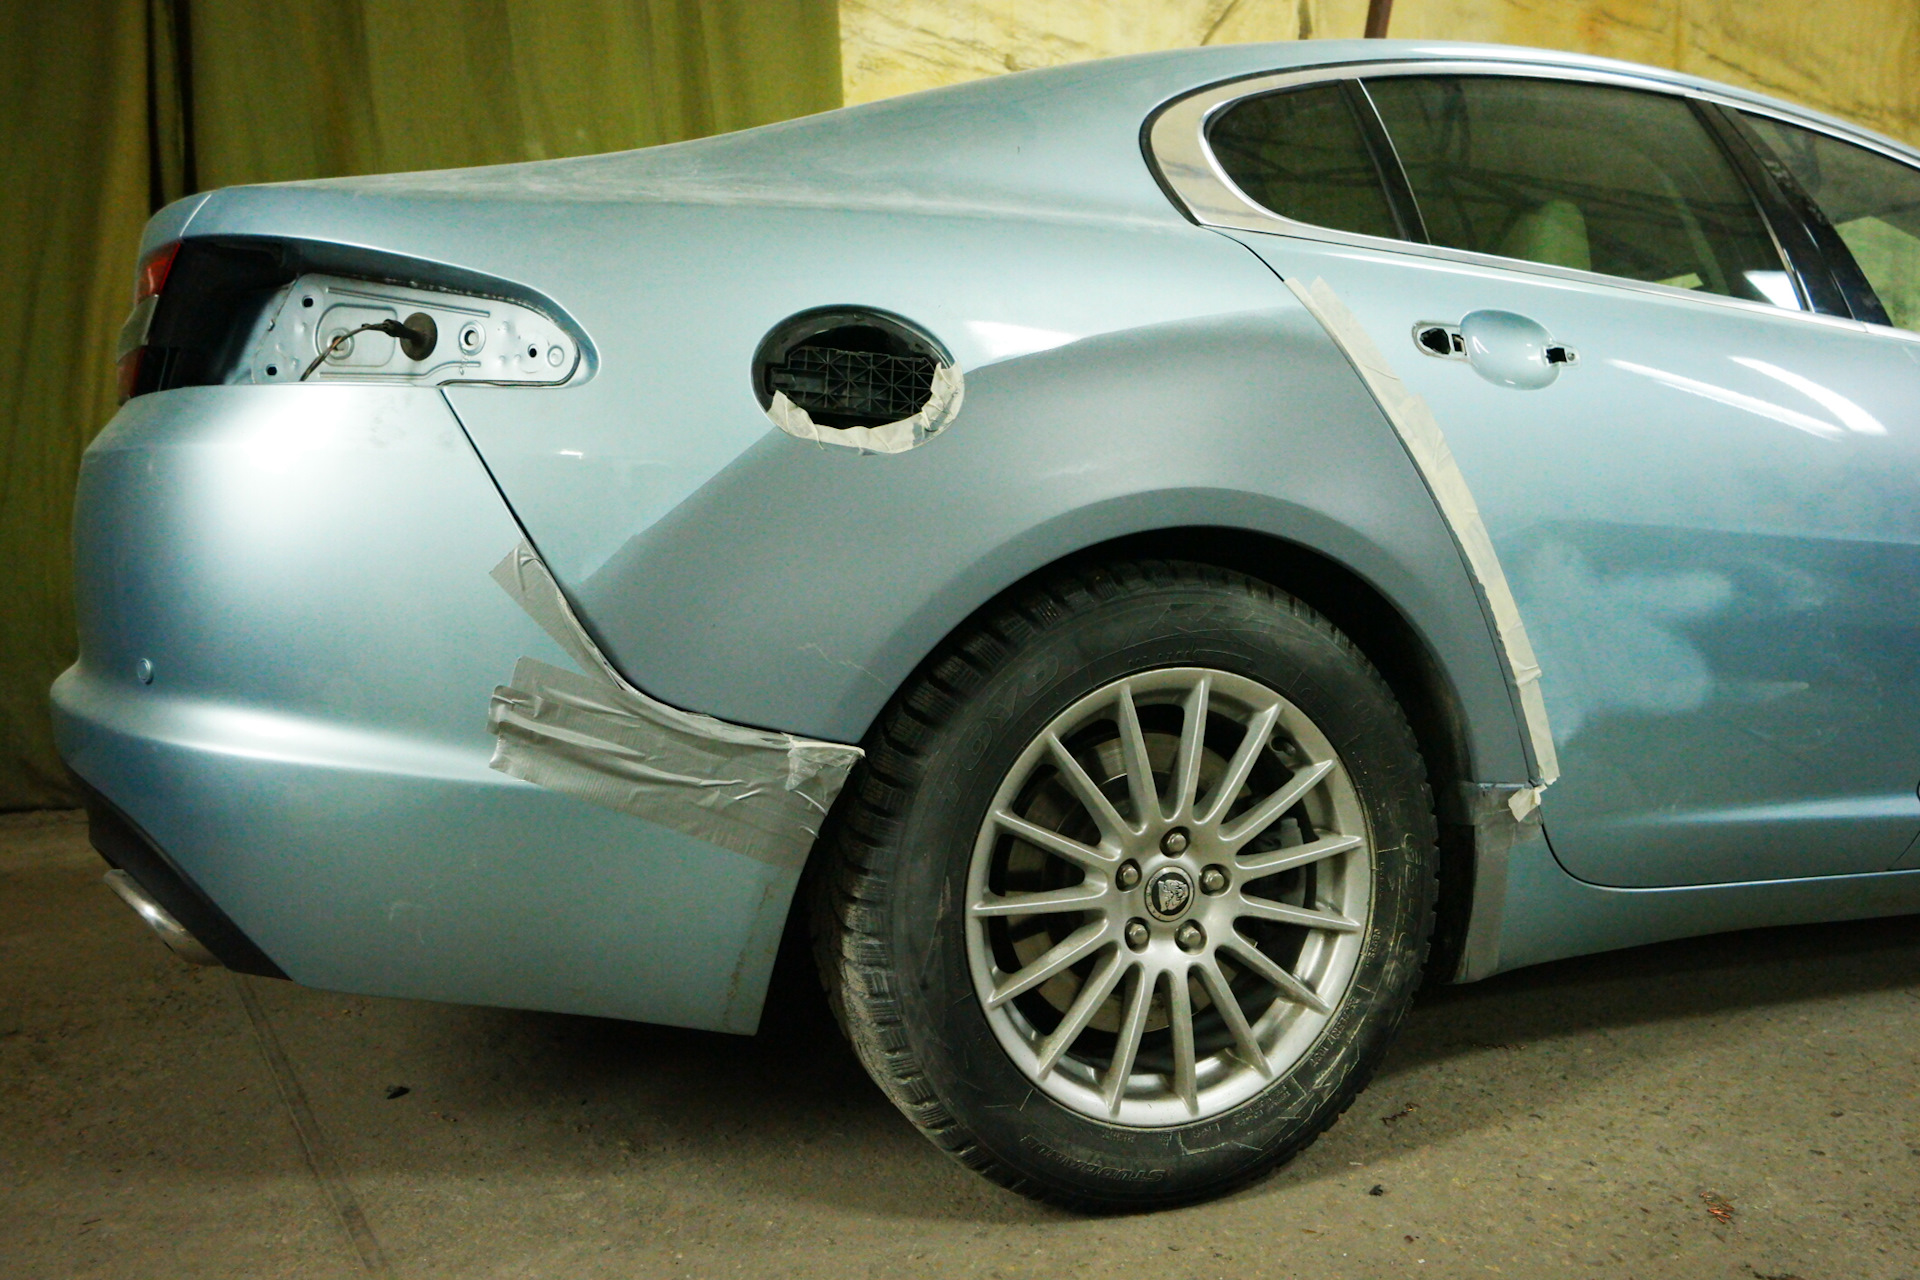 Ремонт алюминиевого автомобиля. Ягуар алюминиевый кузов. Ягуар XF 2014 ржавчина. Покраска кузова на Ягуар. Расширение кузова металлом.